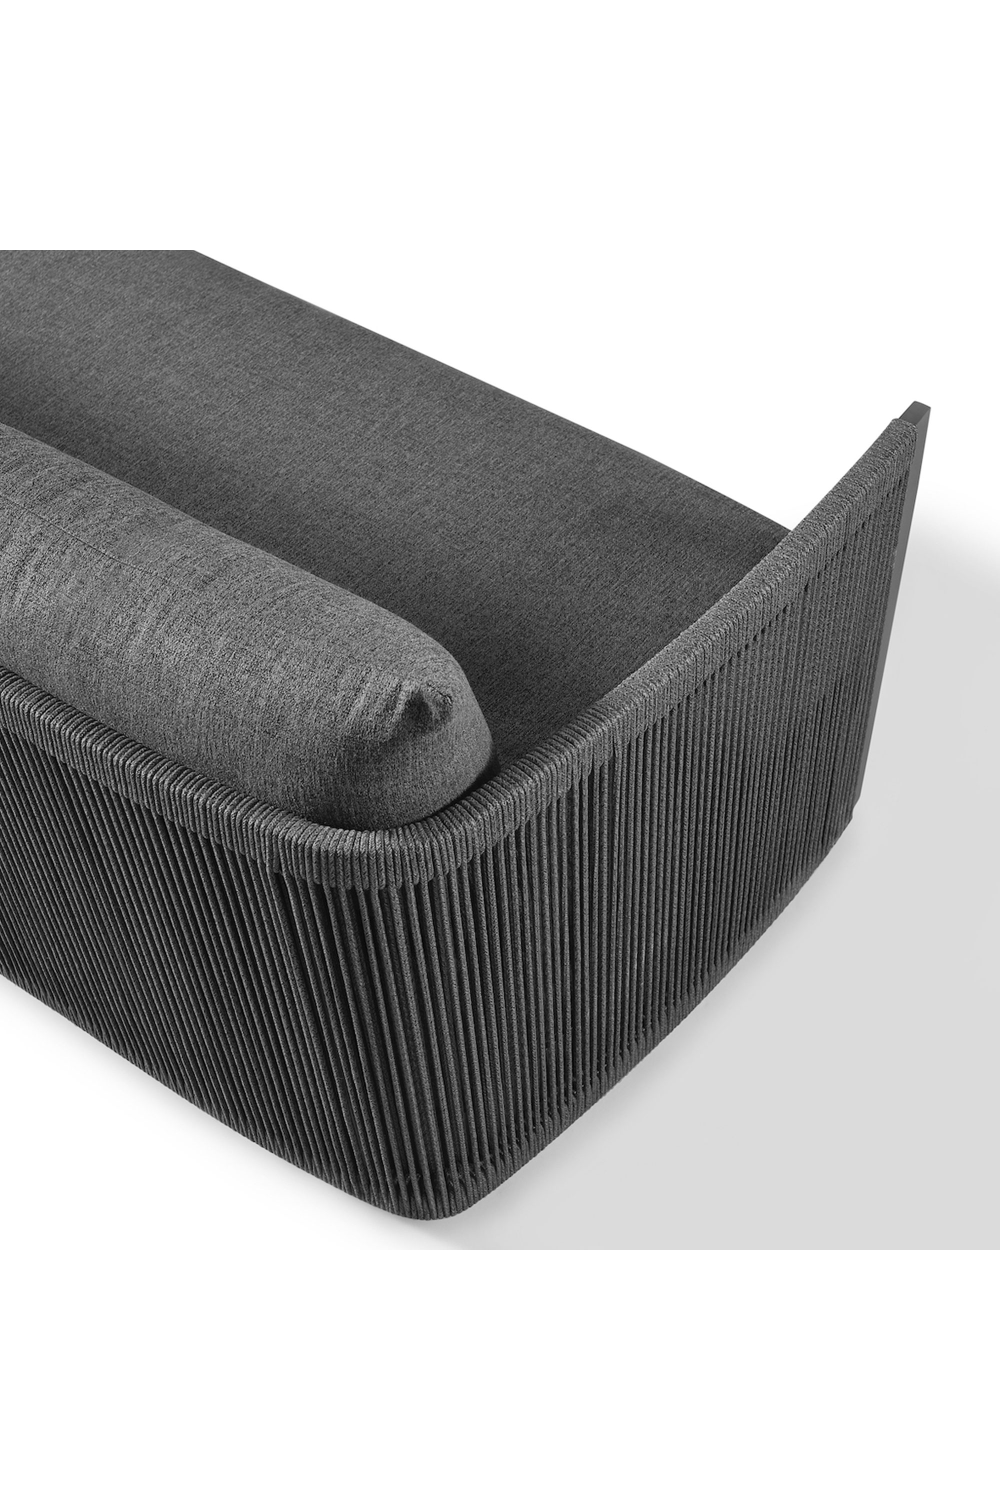 Woven Rope Outdoor Sofa | Andrew Martin Bali | OROA